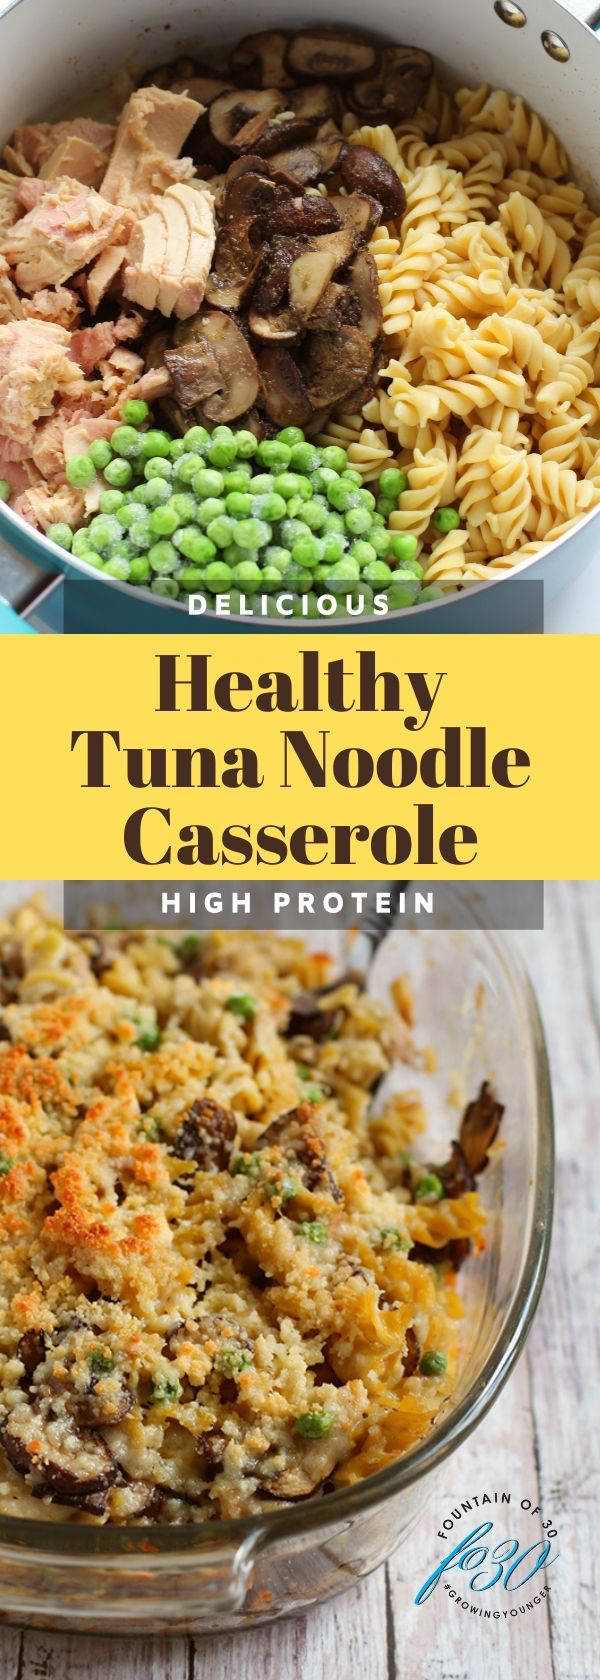 healthy tuna noodle casserole recipe fountainof30